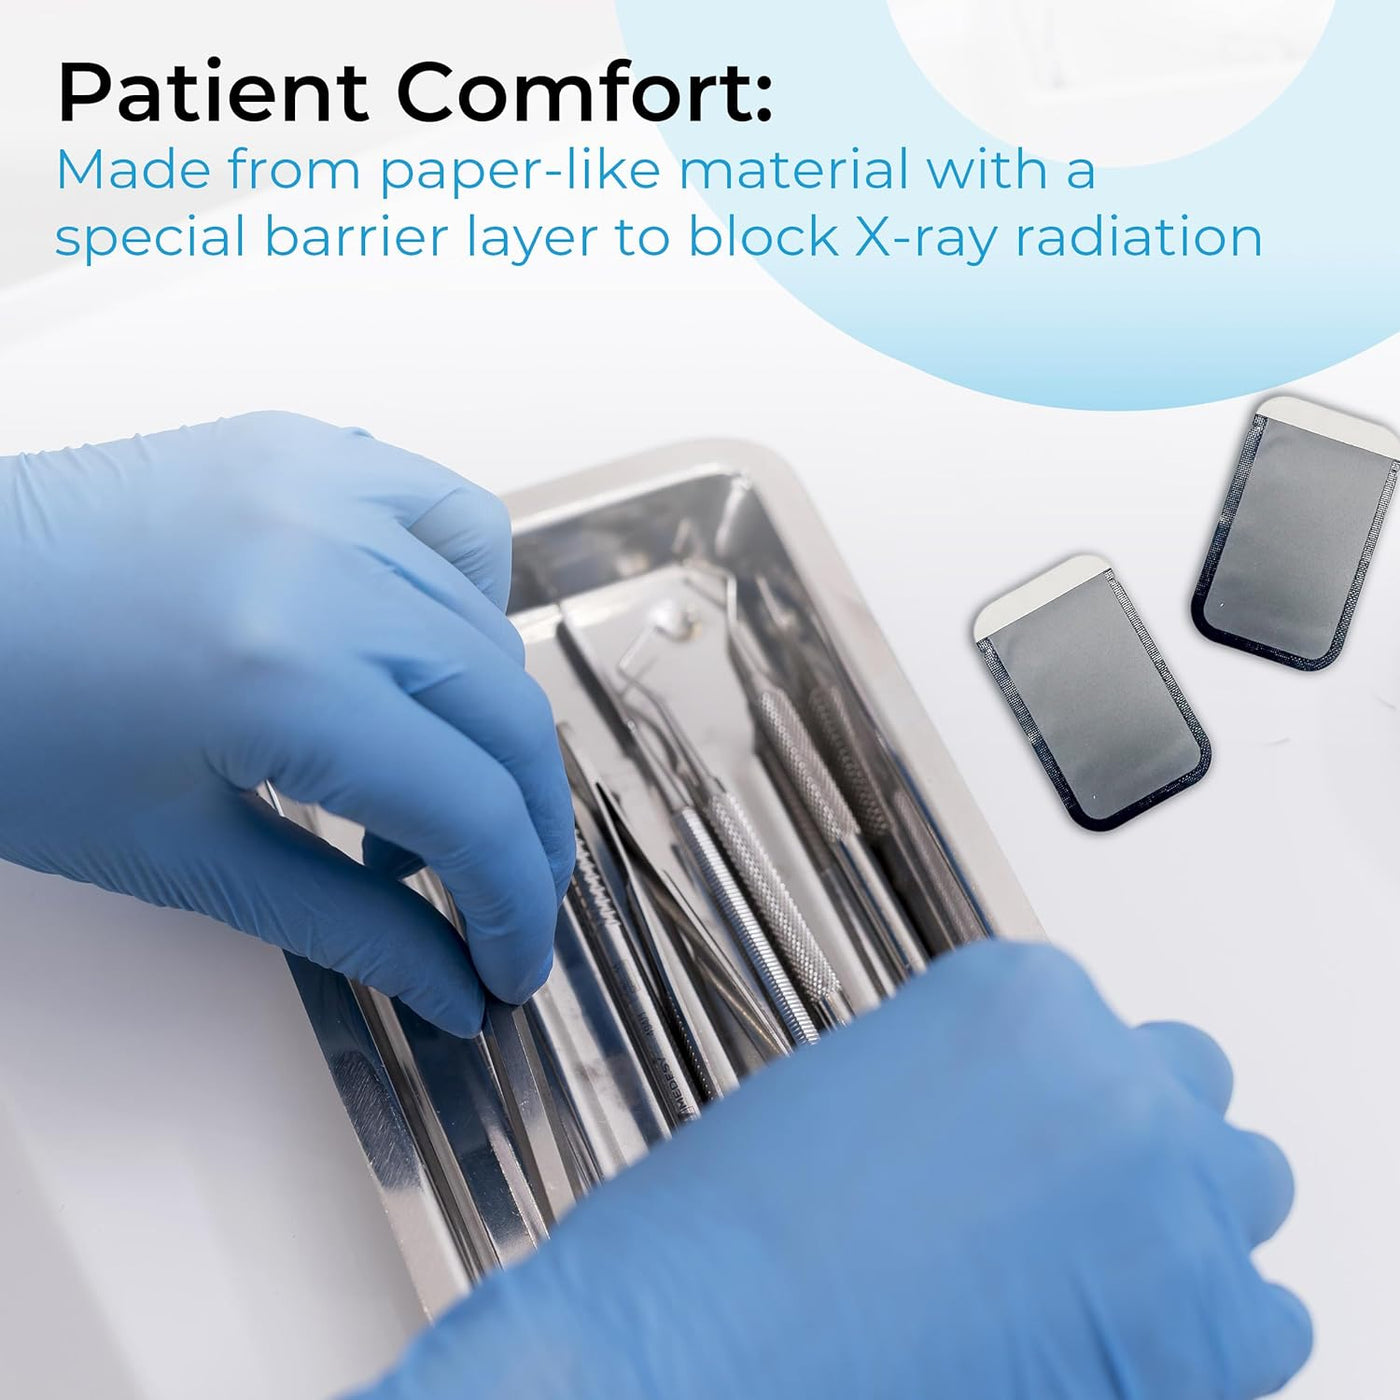 Dental X-Ray Barrier Envelopes (Size: 0, 1, 2) (4119991353443)